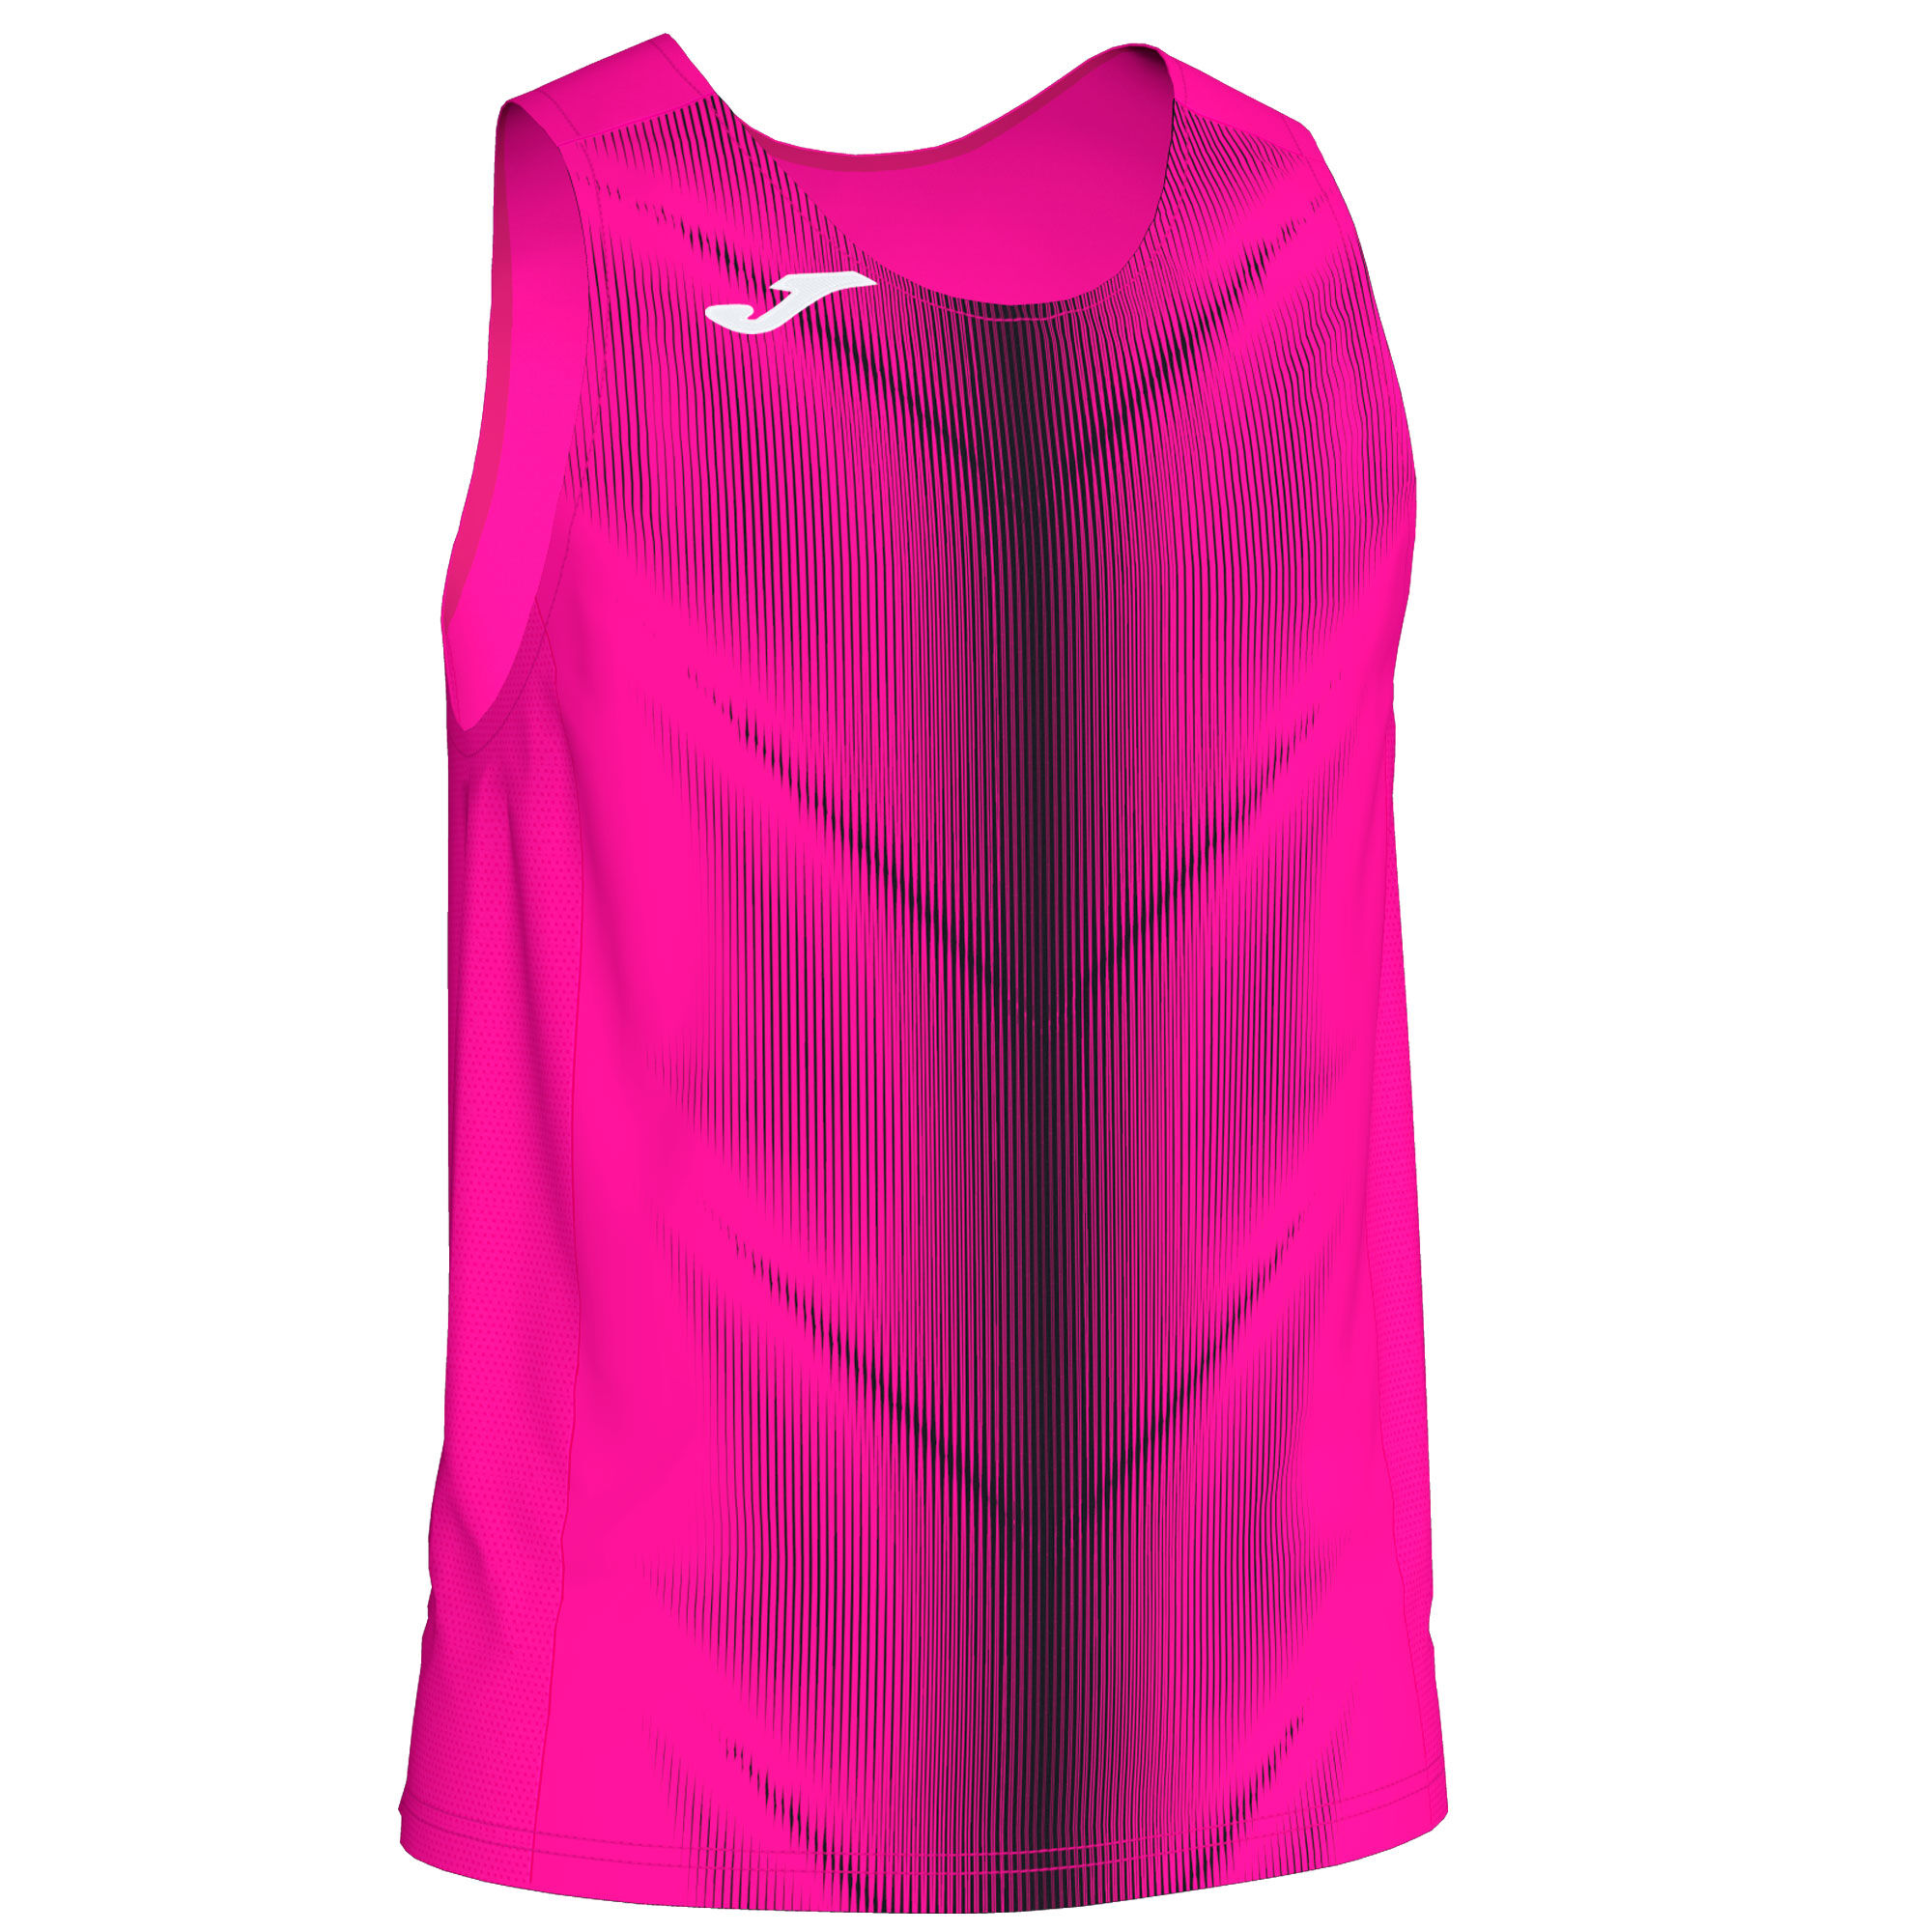 Sleeveless t-shirt man Olimpia fluorescent pink black